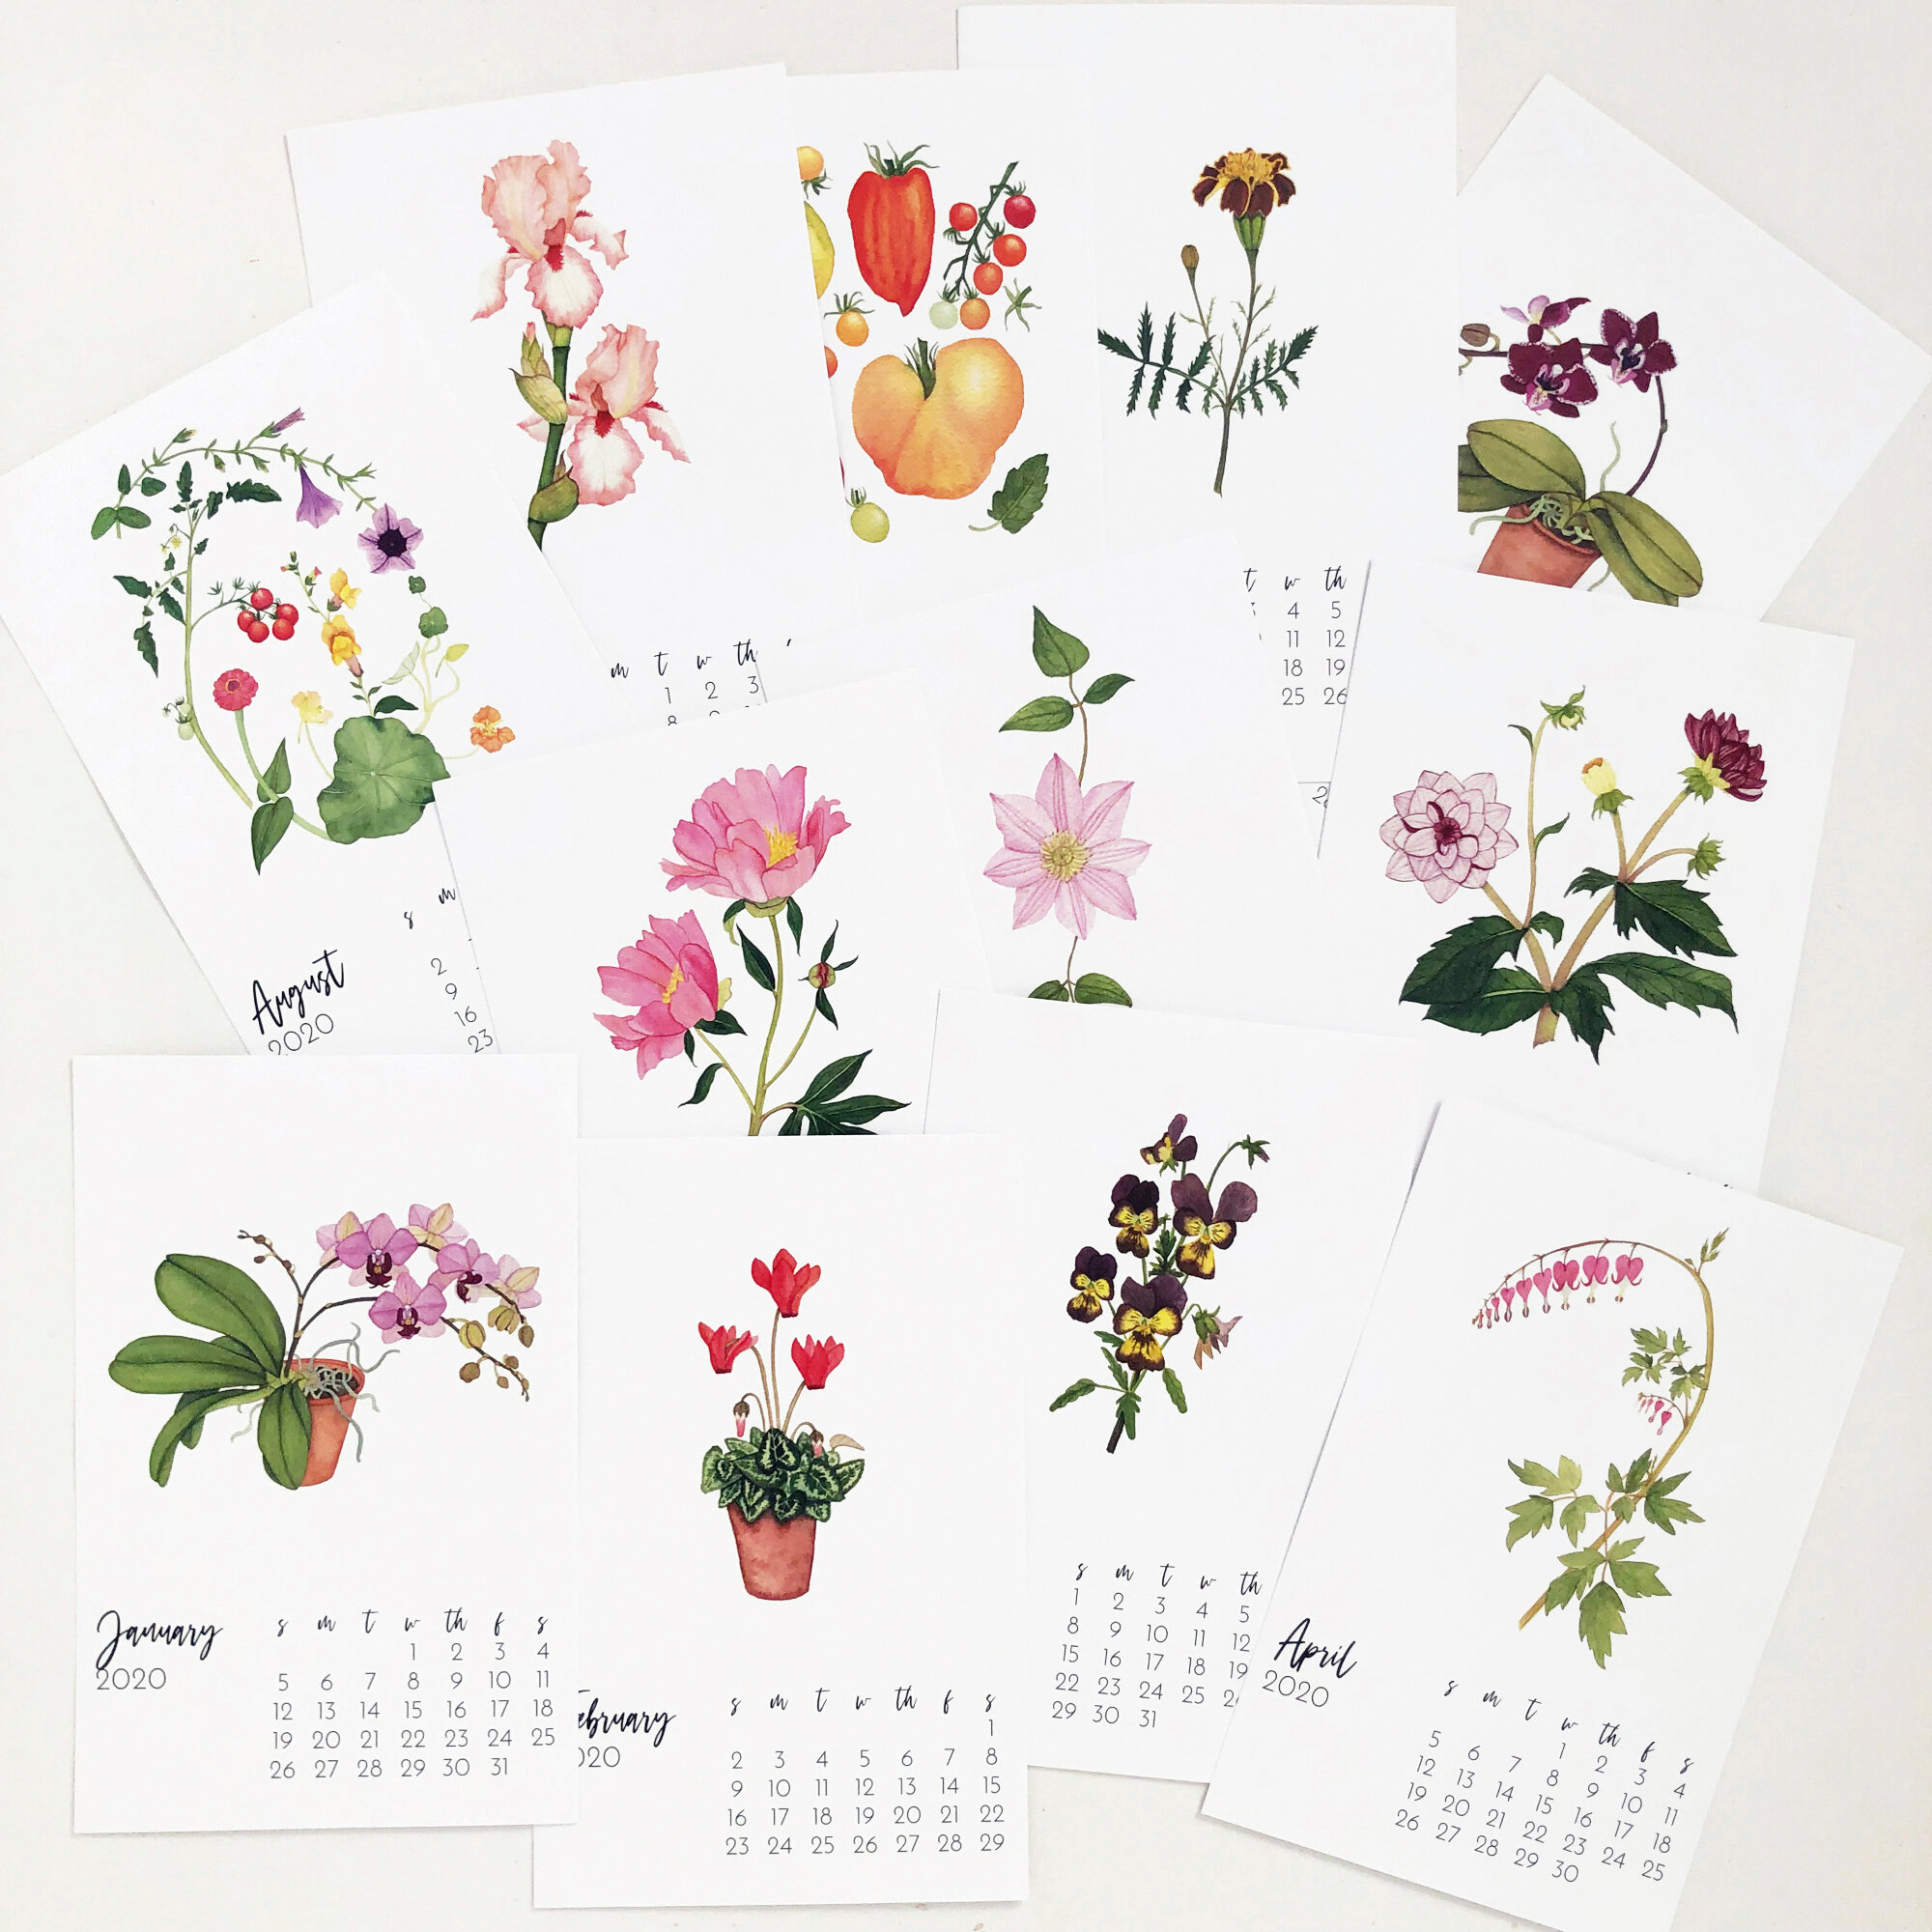 2020 Botanical Watercolor Calendar by Anne Butera